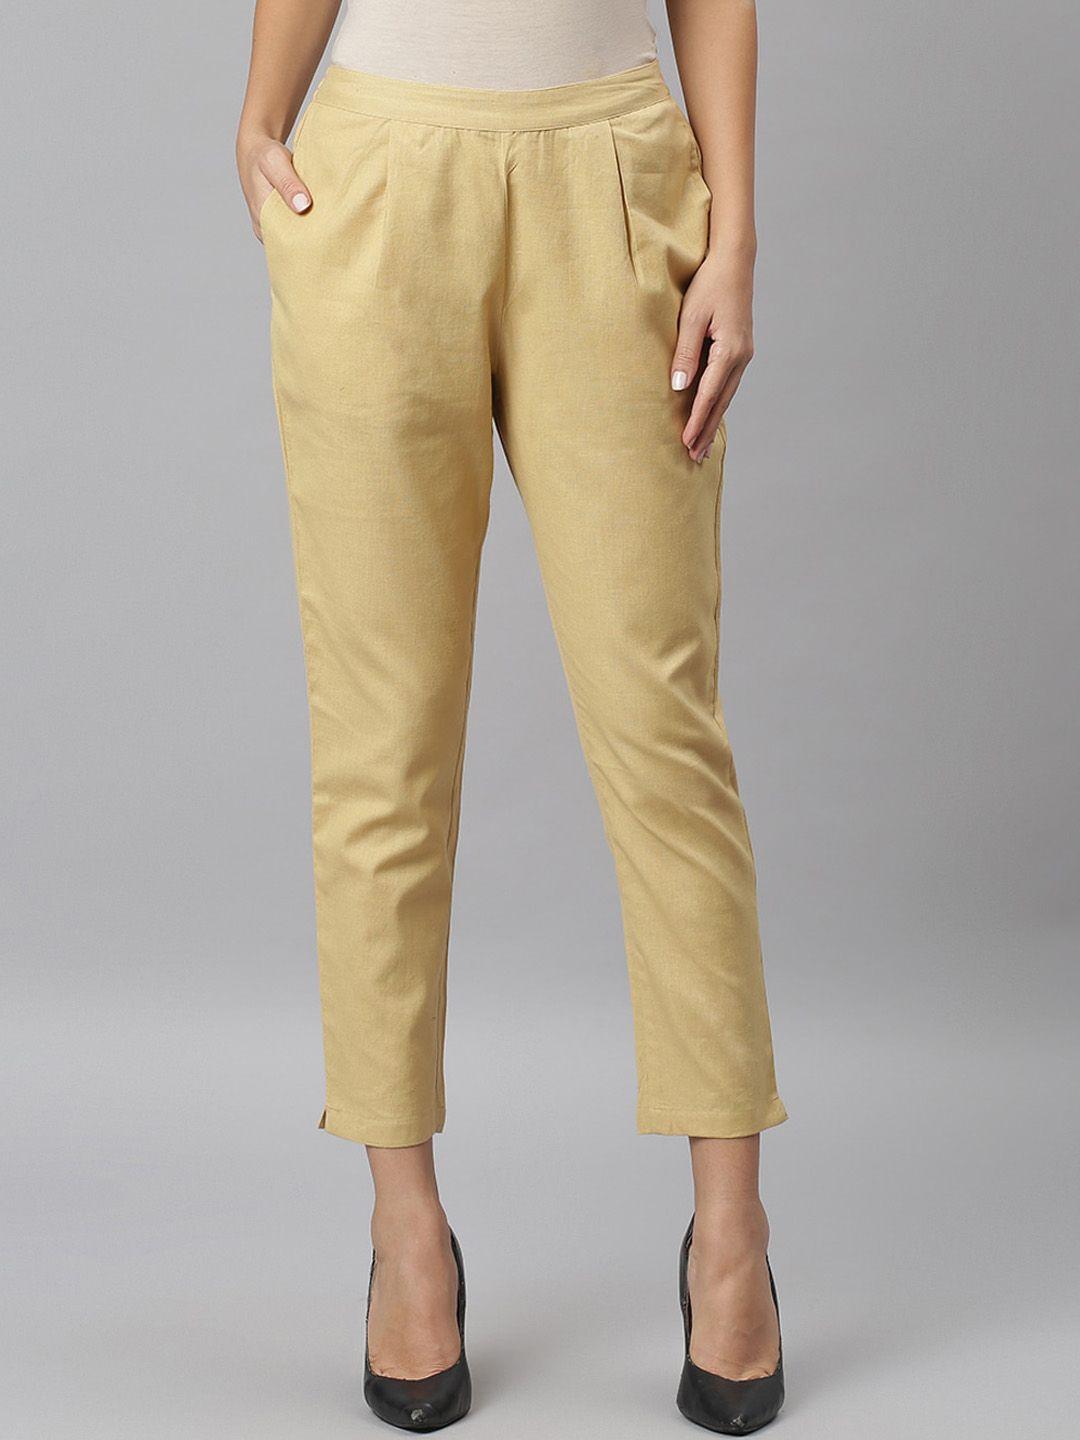 jaipur attire women beige solid pleated cigarette trousers